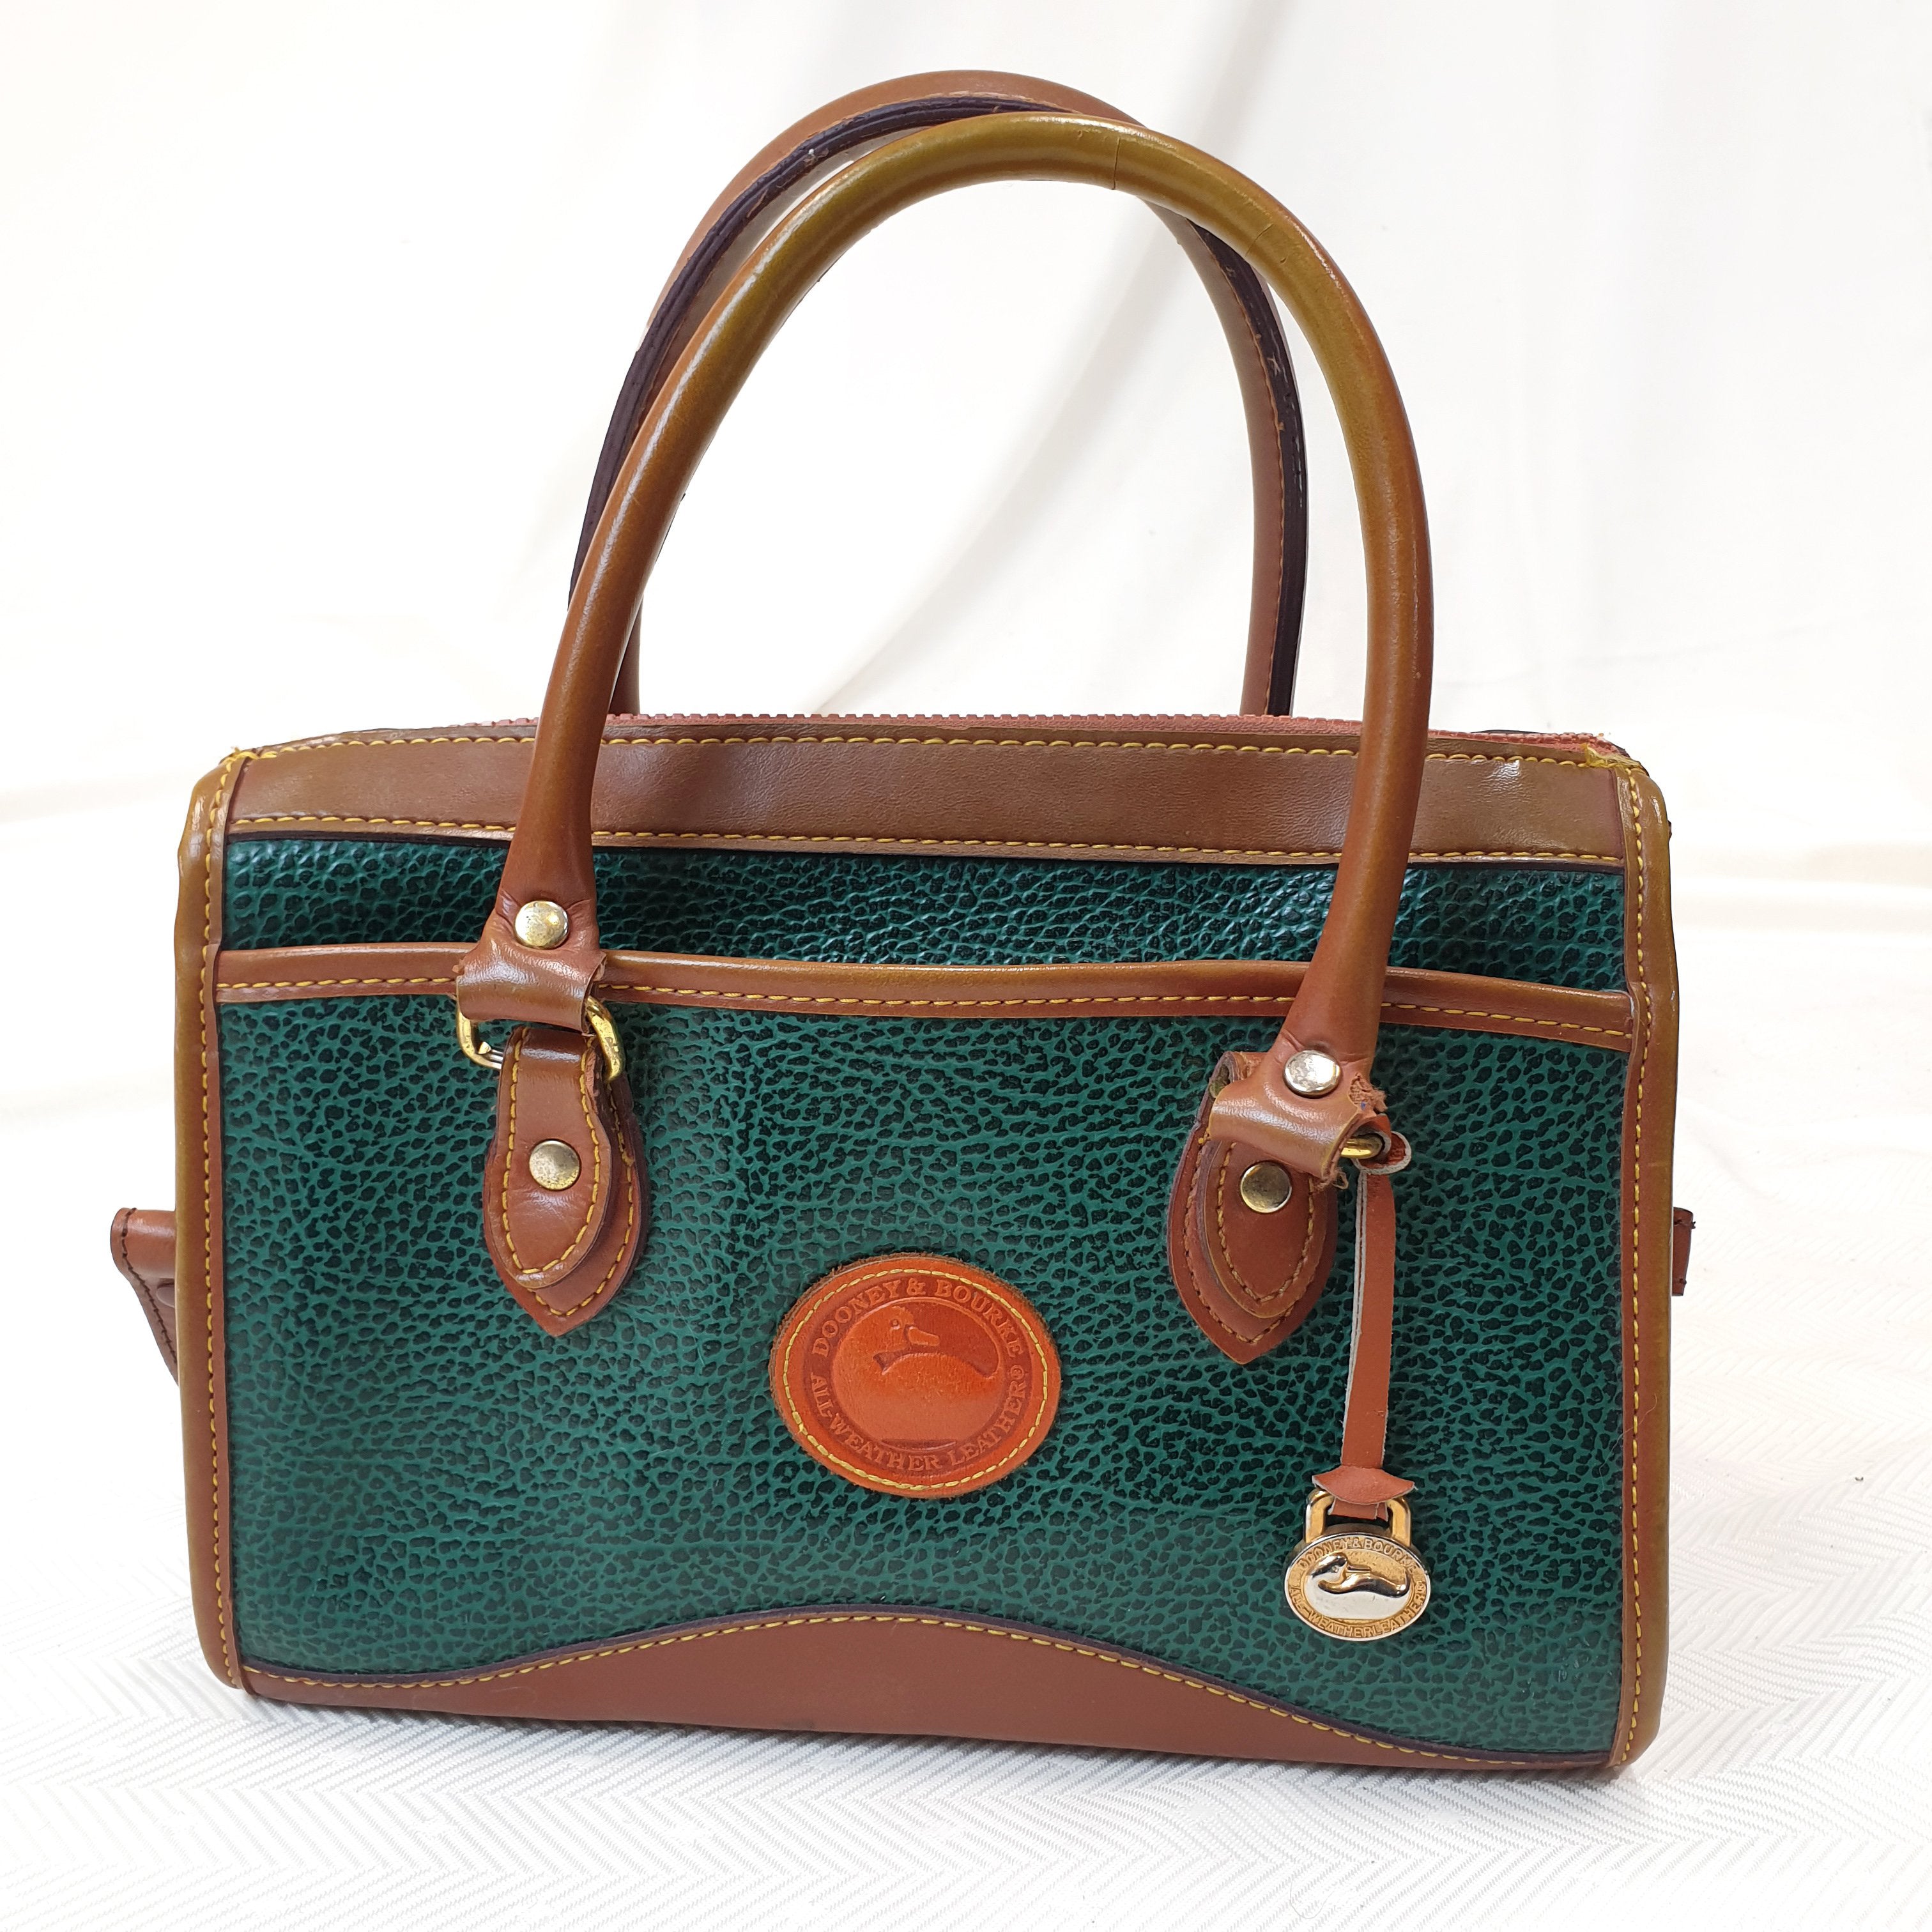 Dooney & Bourke Green Leather Hand/Shoulderbag